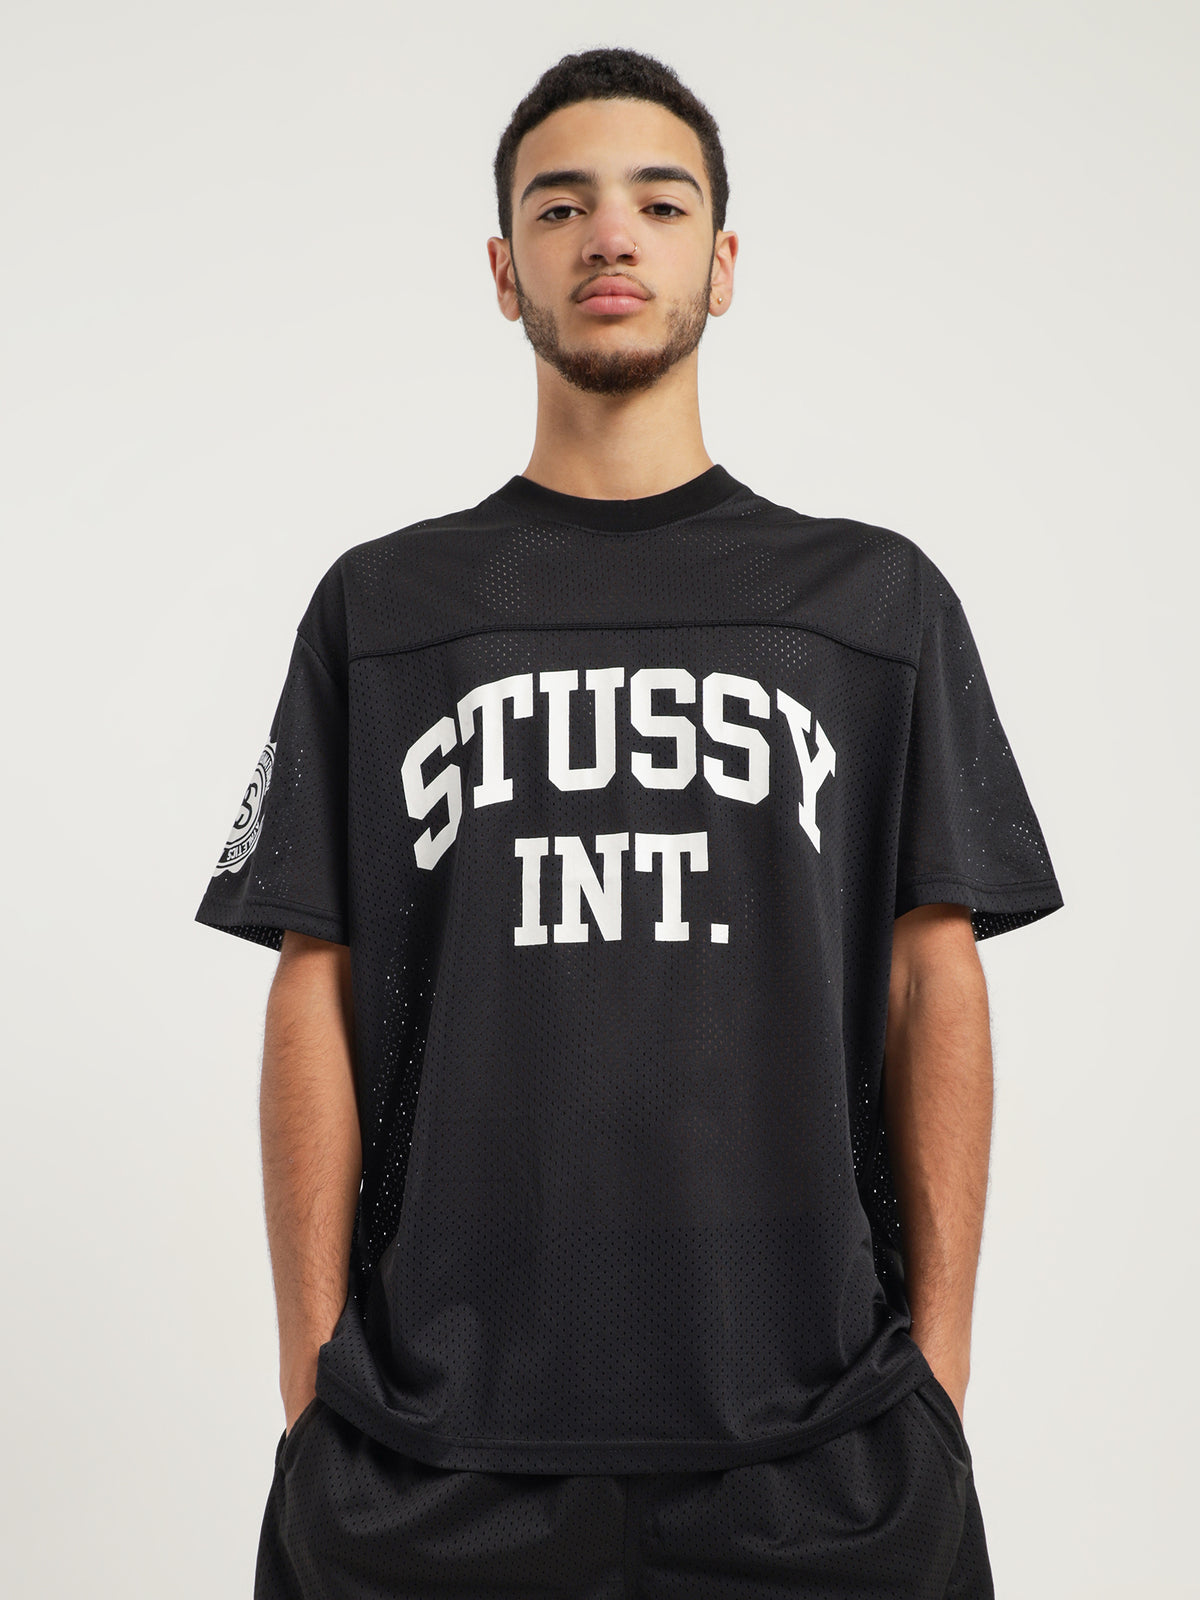 Stussy Int. Mesh T-Shirt in Black